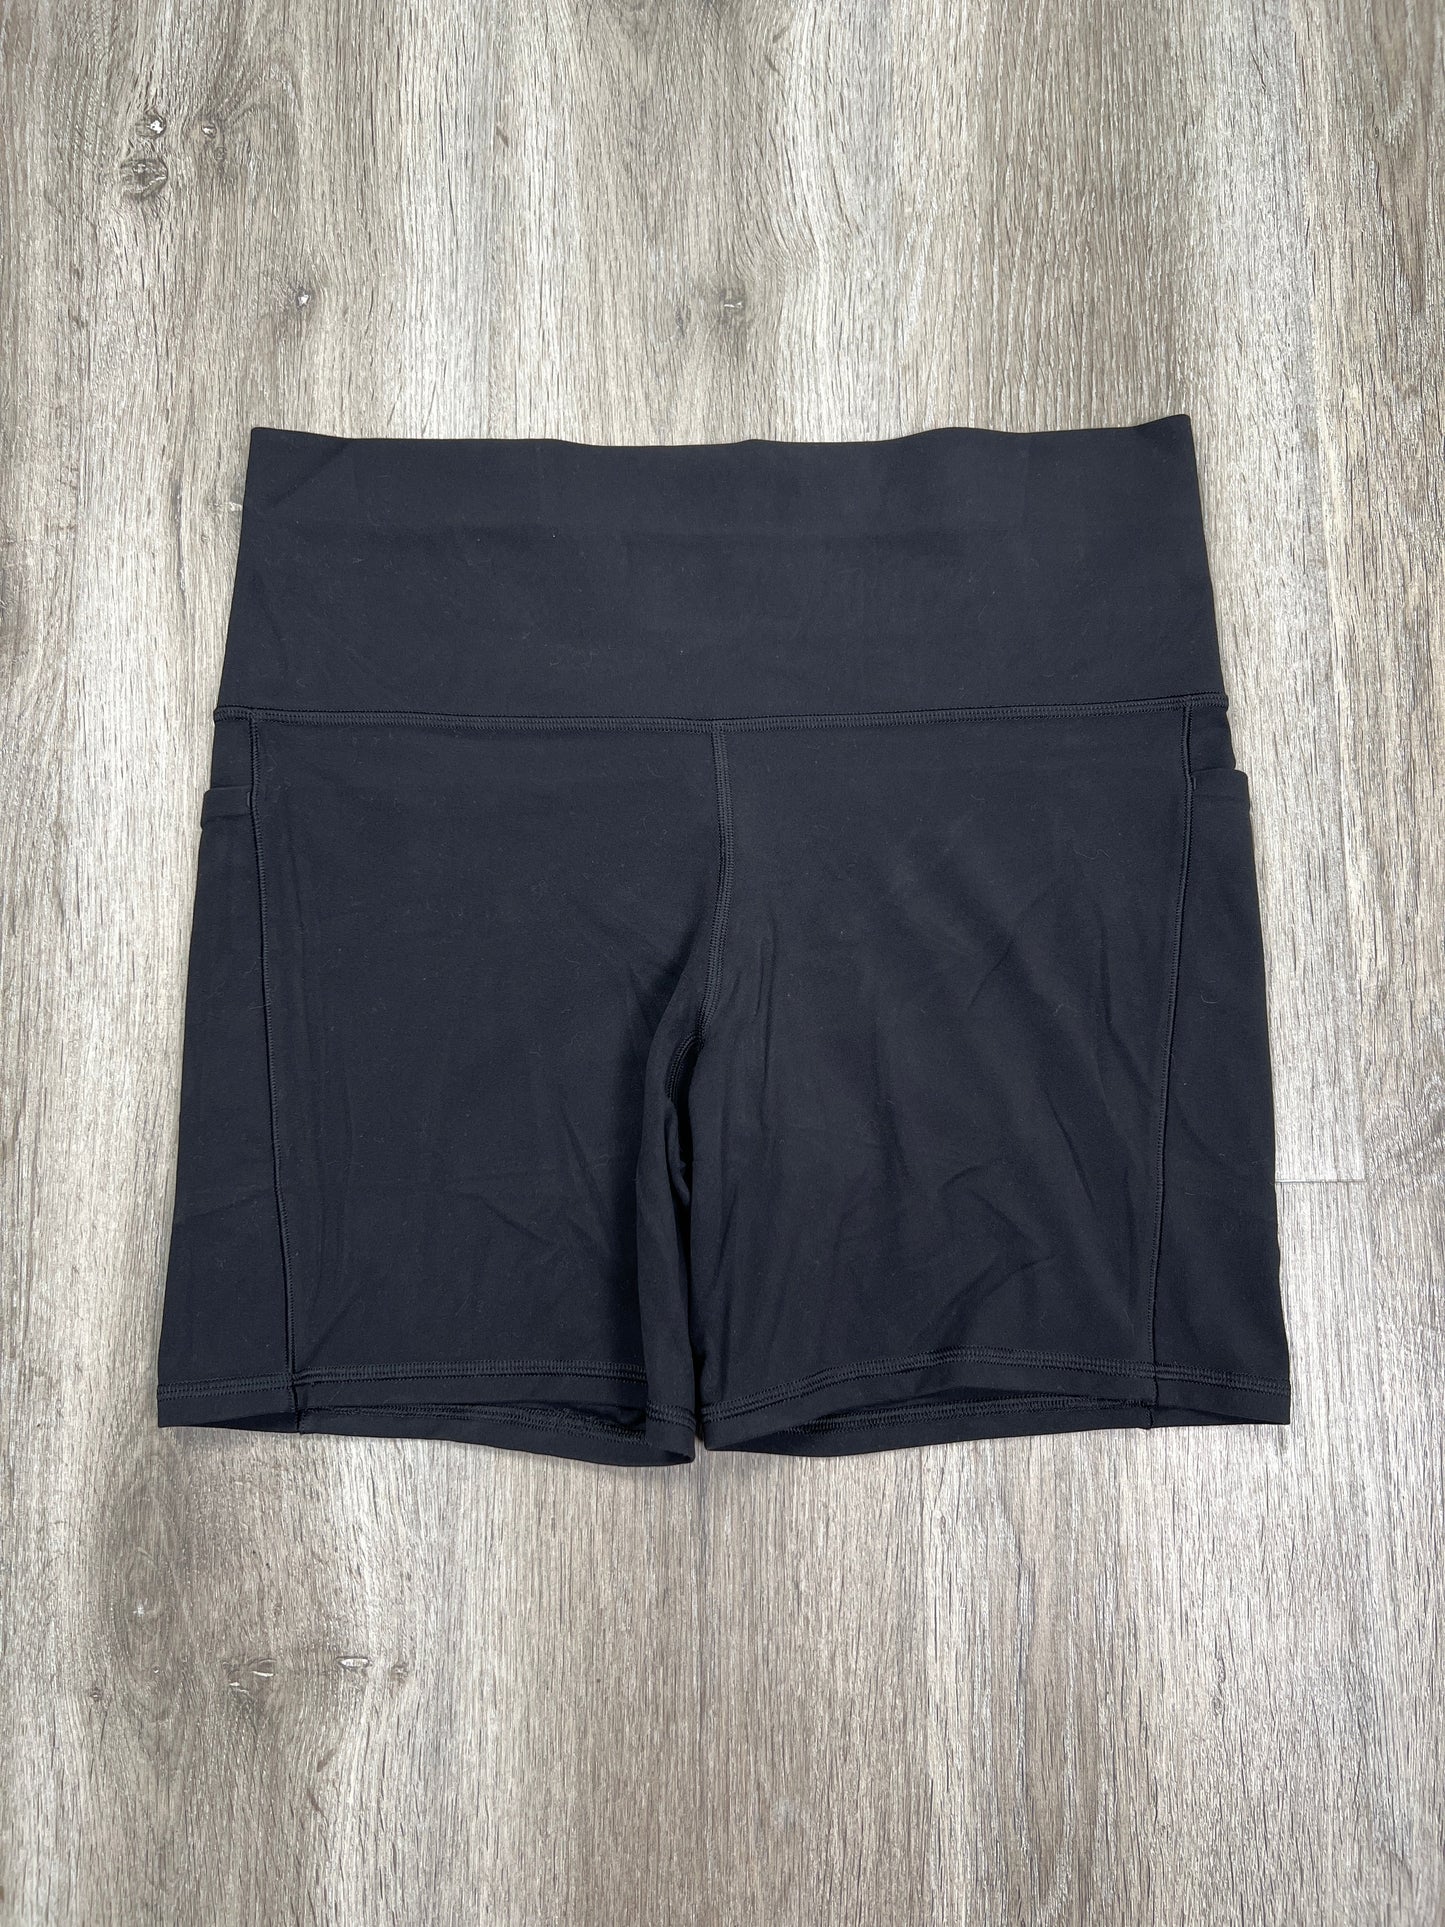 Black Athletic Shorts Athleta, Size 1x